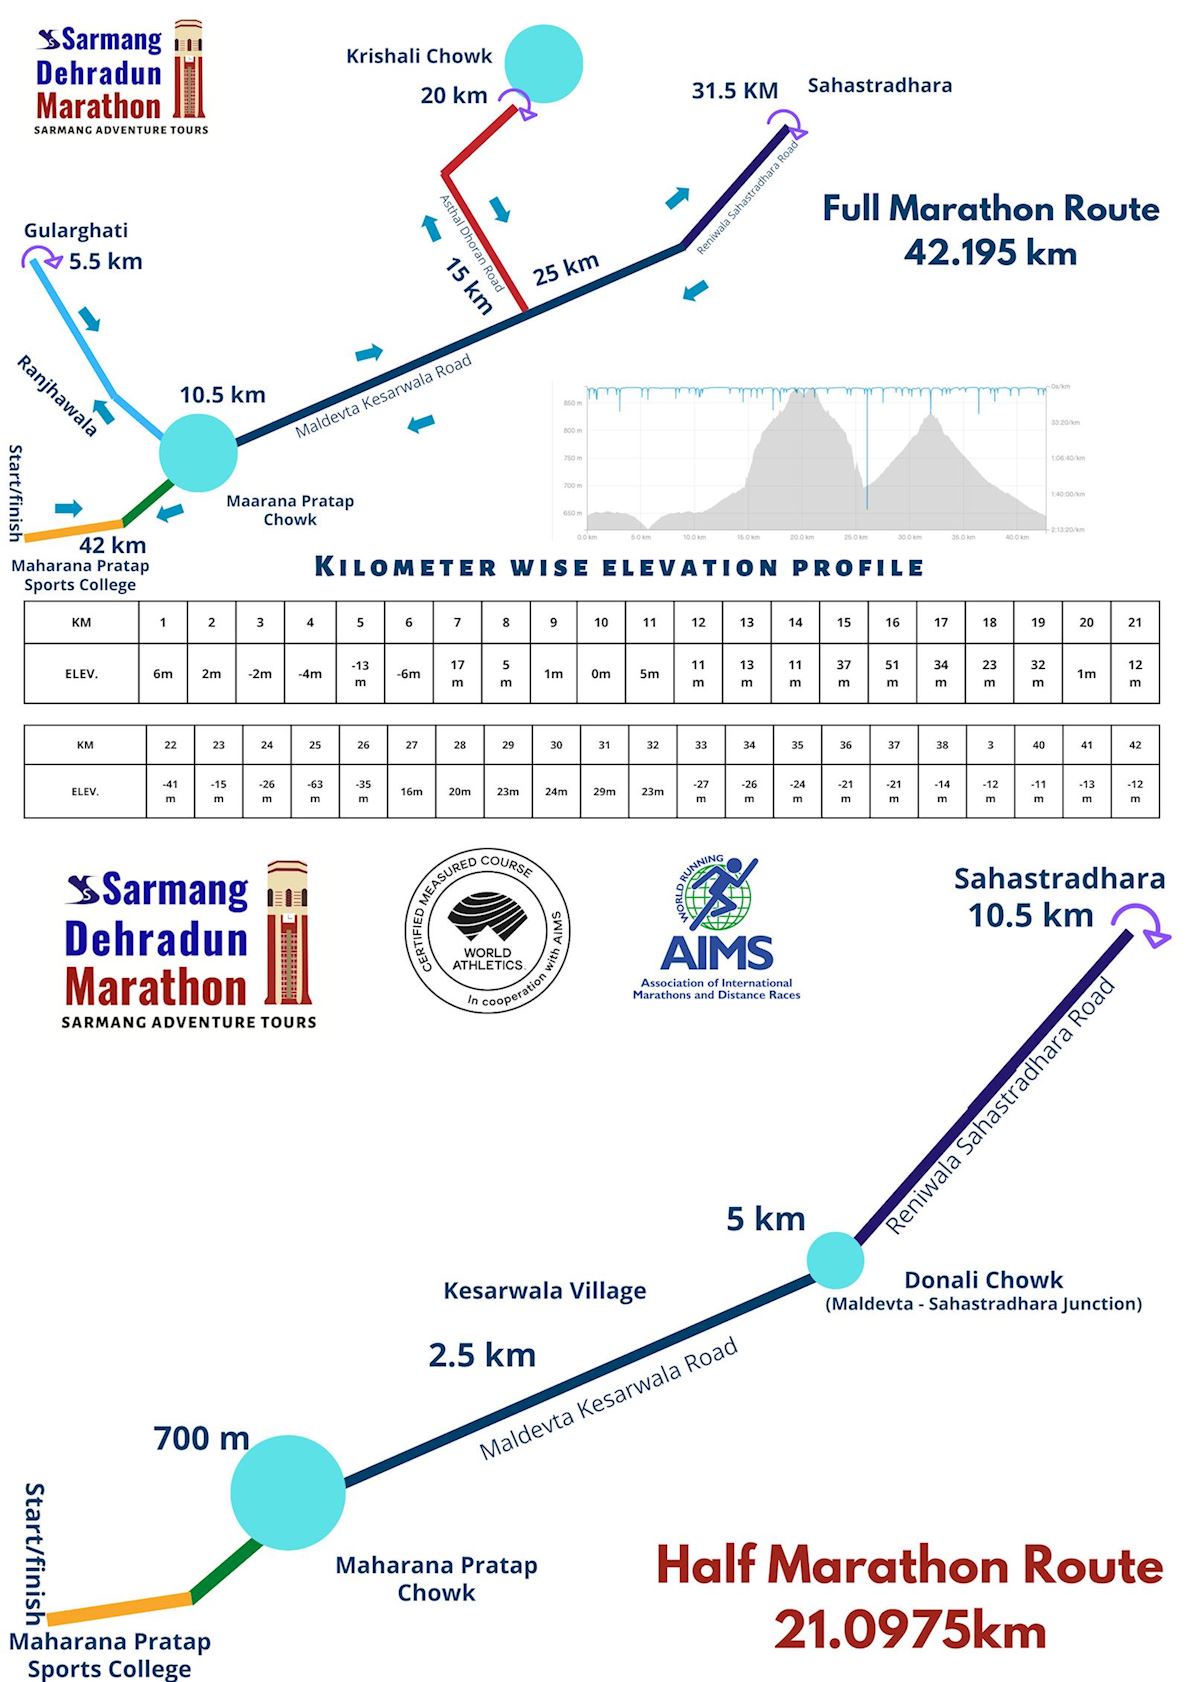 Sarmang Dehradun Marathon Third Edition Mappa del percorso